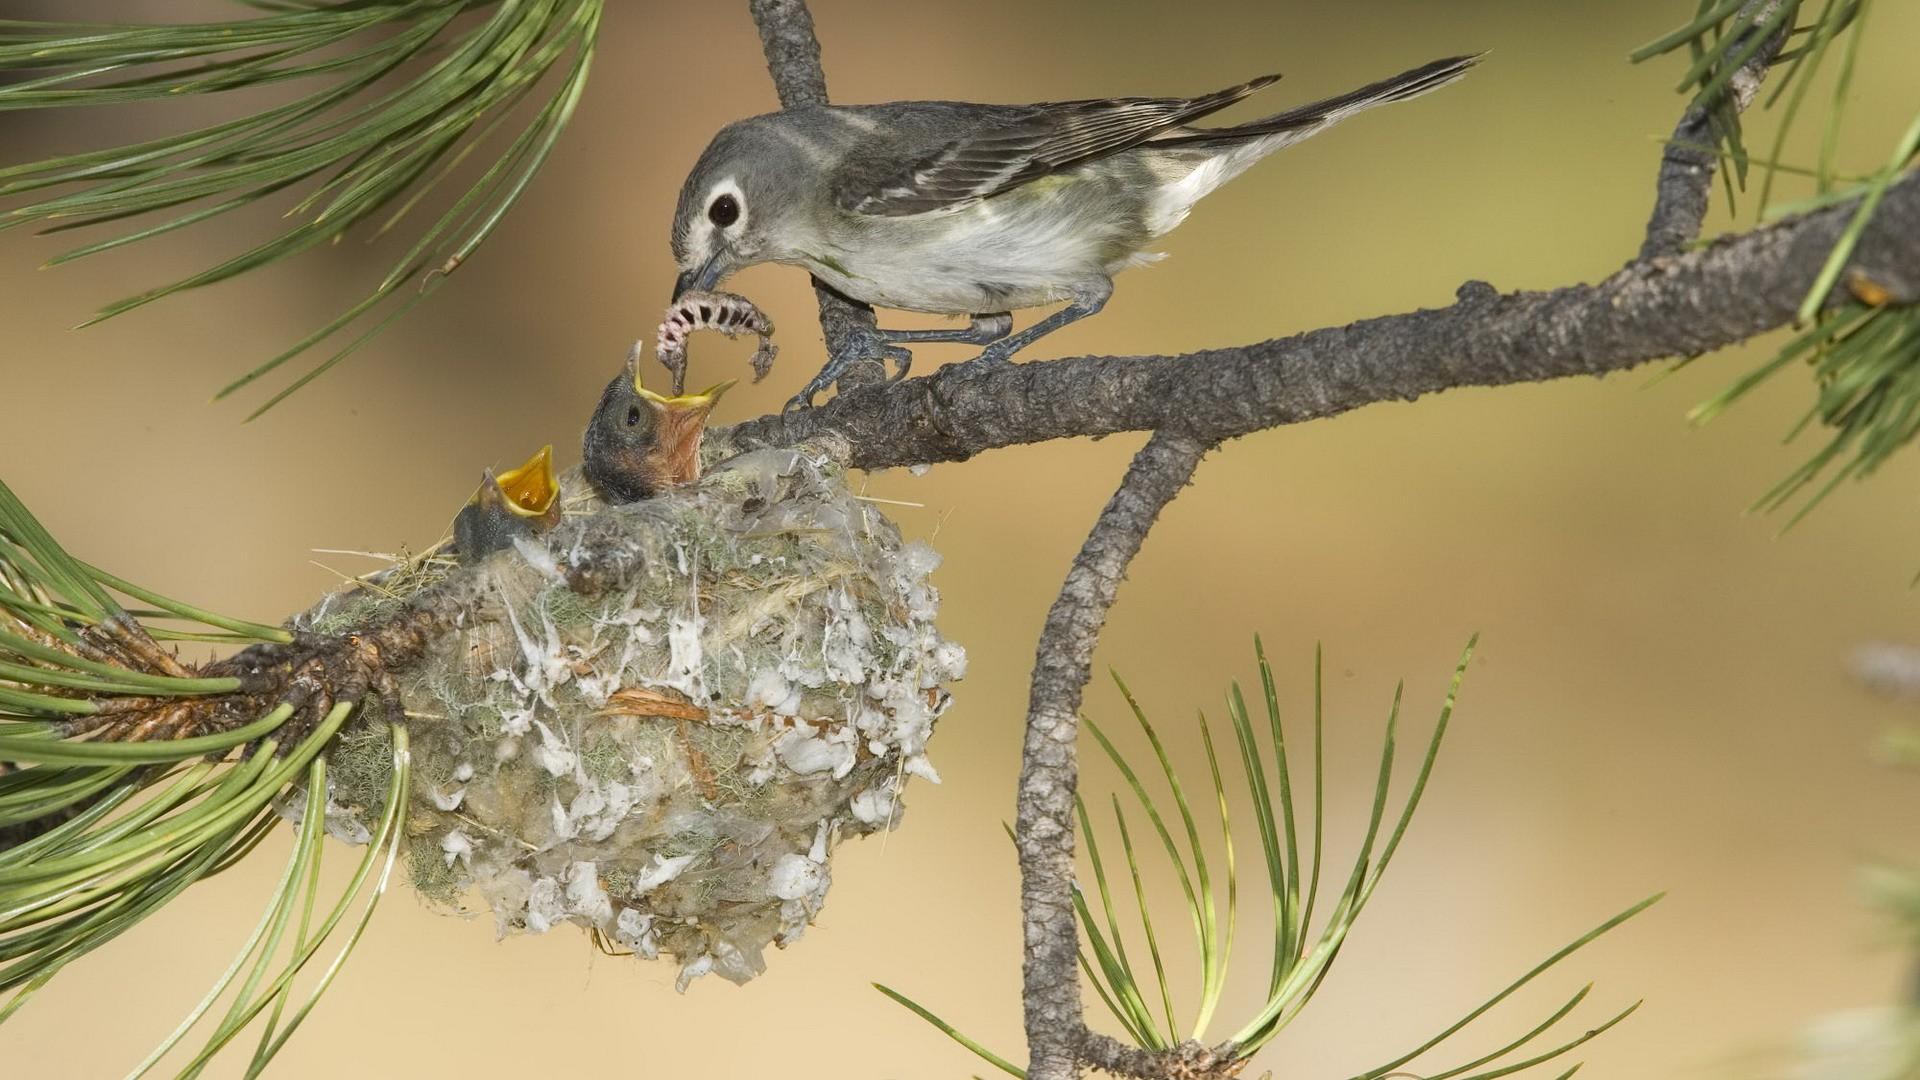 Mother Bird Feeding Baby Birds